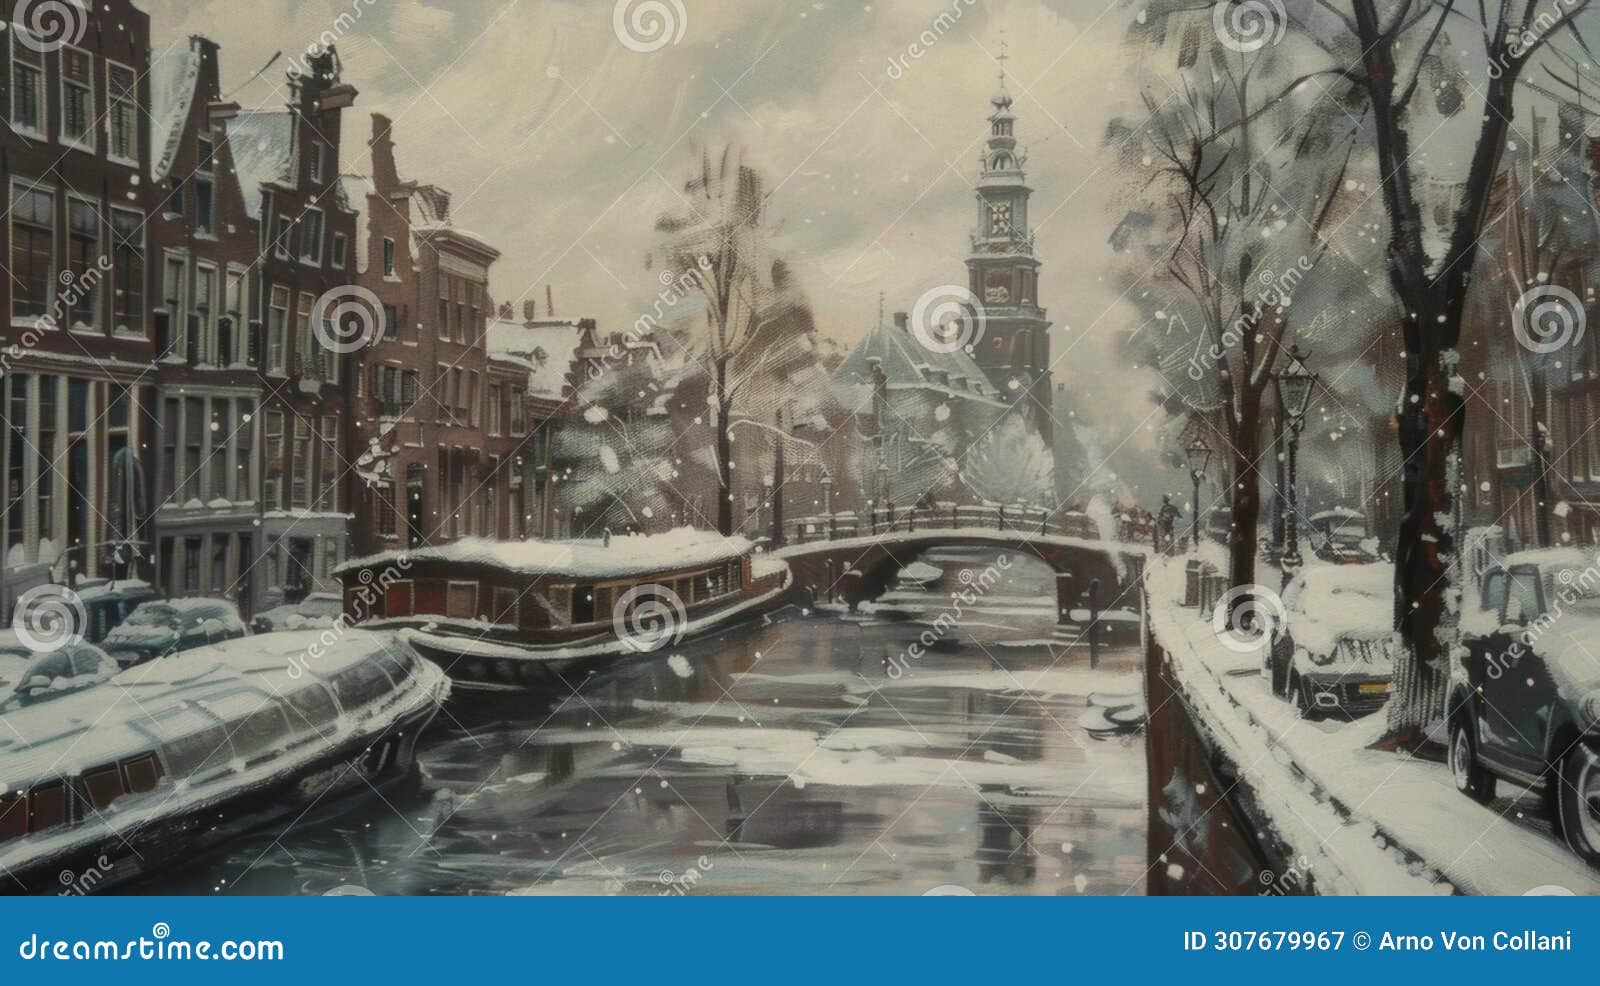 winter wonderland: charming frozen gracht in picturesque amsterdam canal